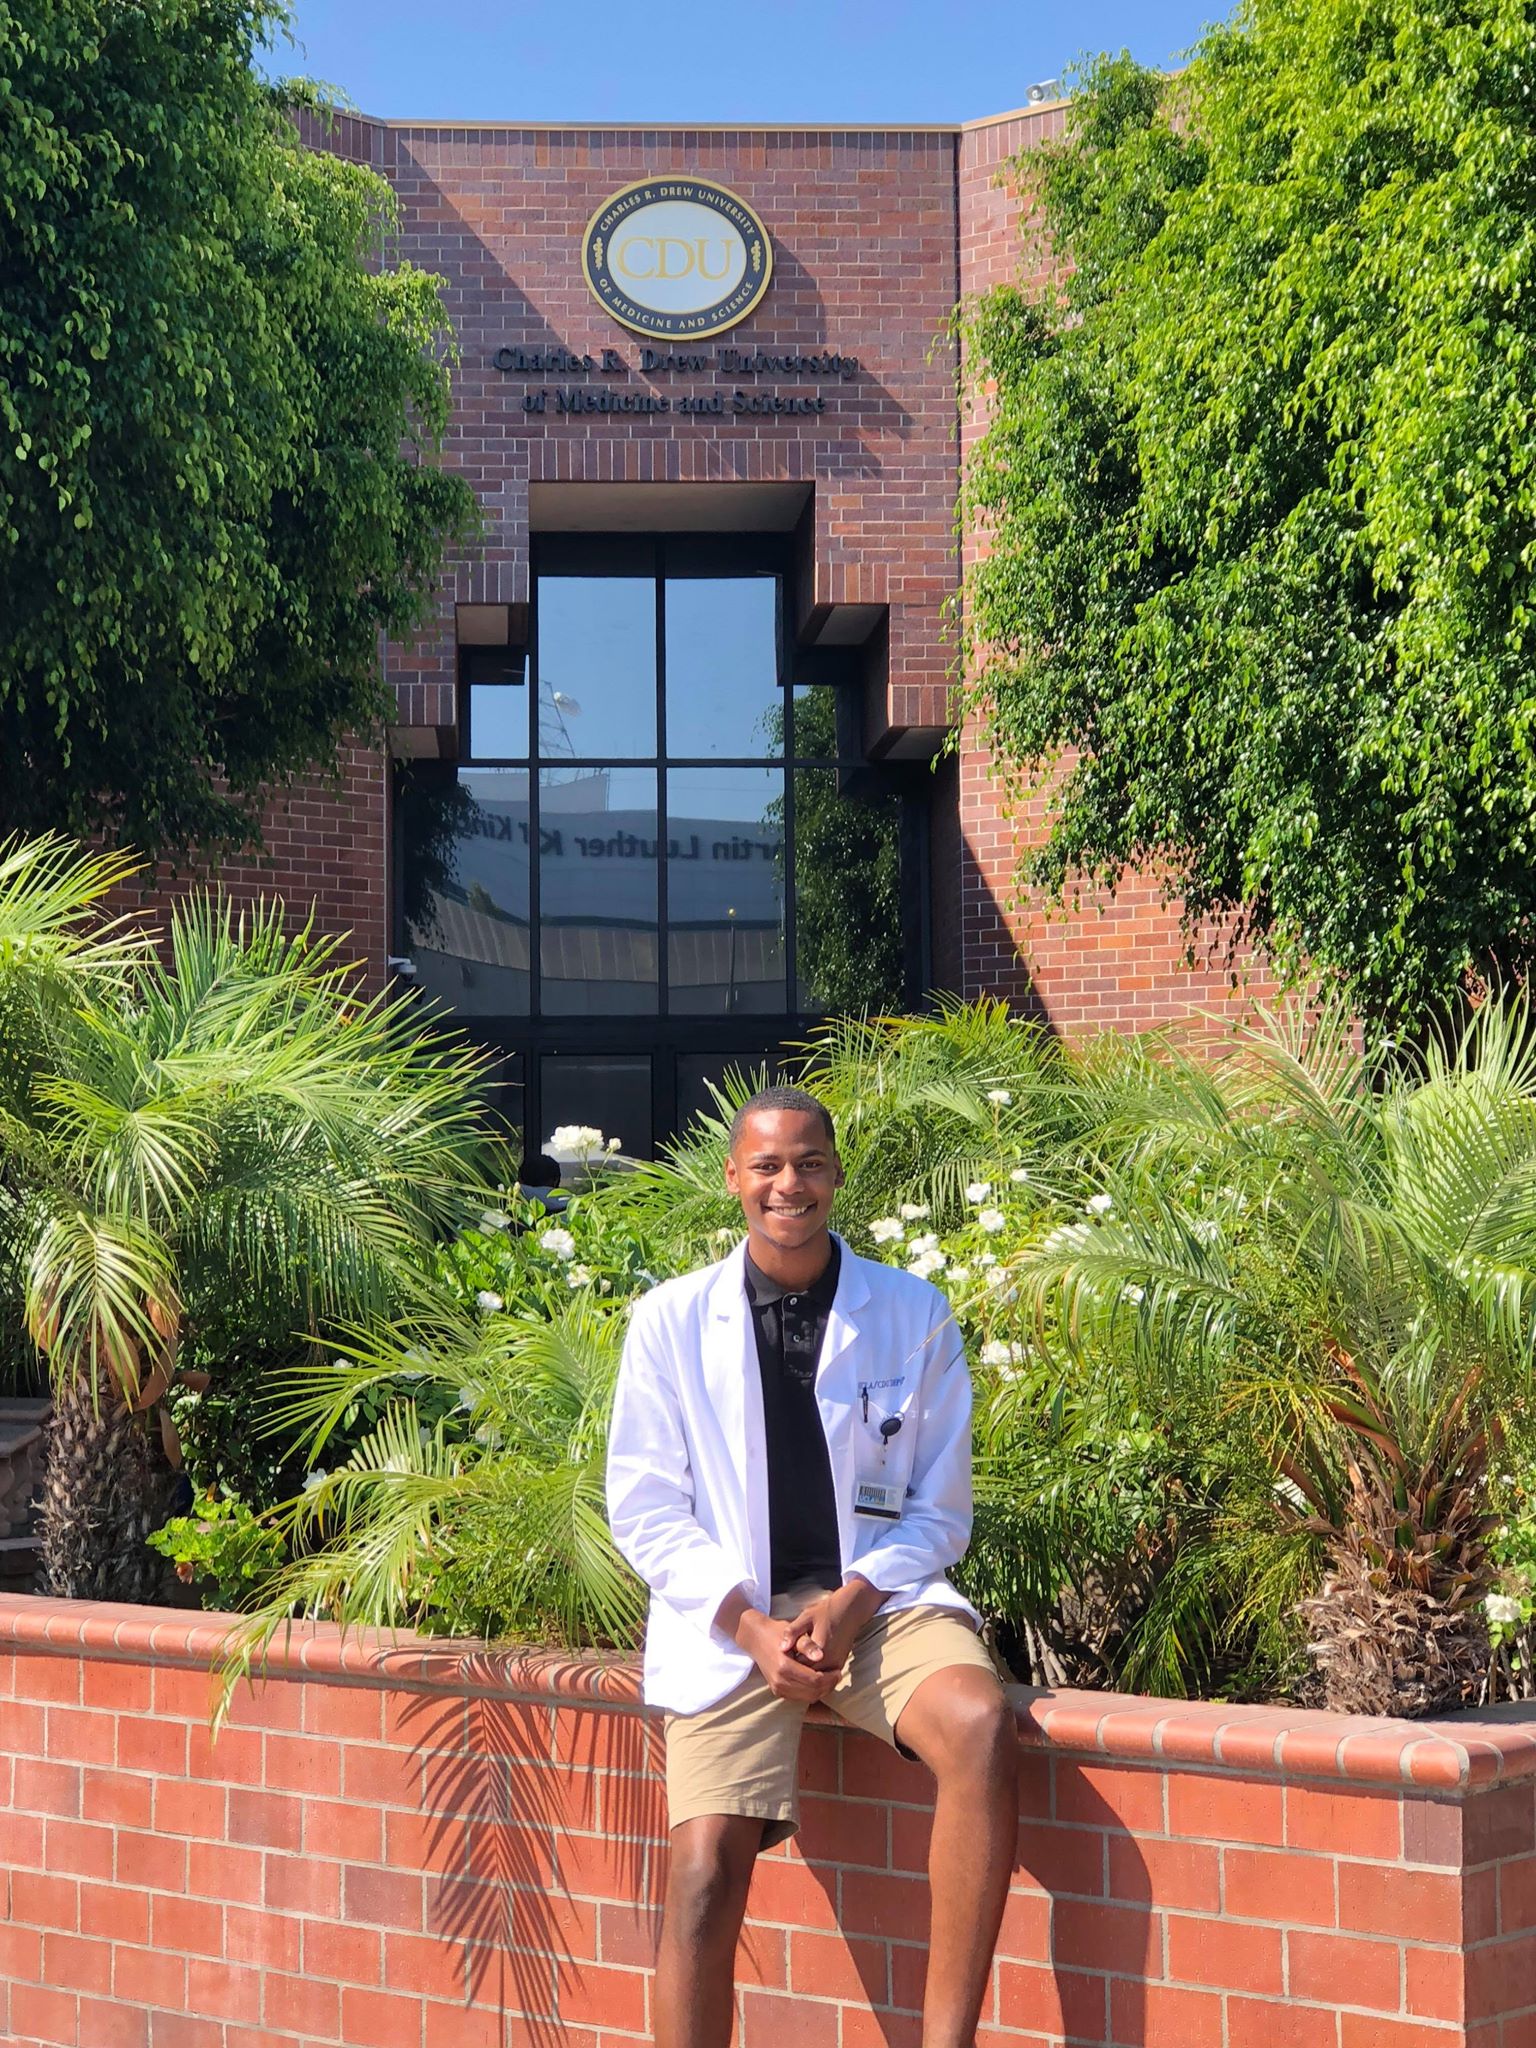 Marcel posing outside of Charles Drew University School of Medicine